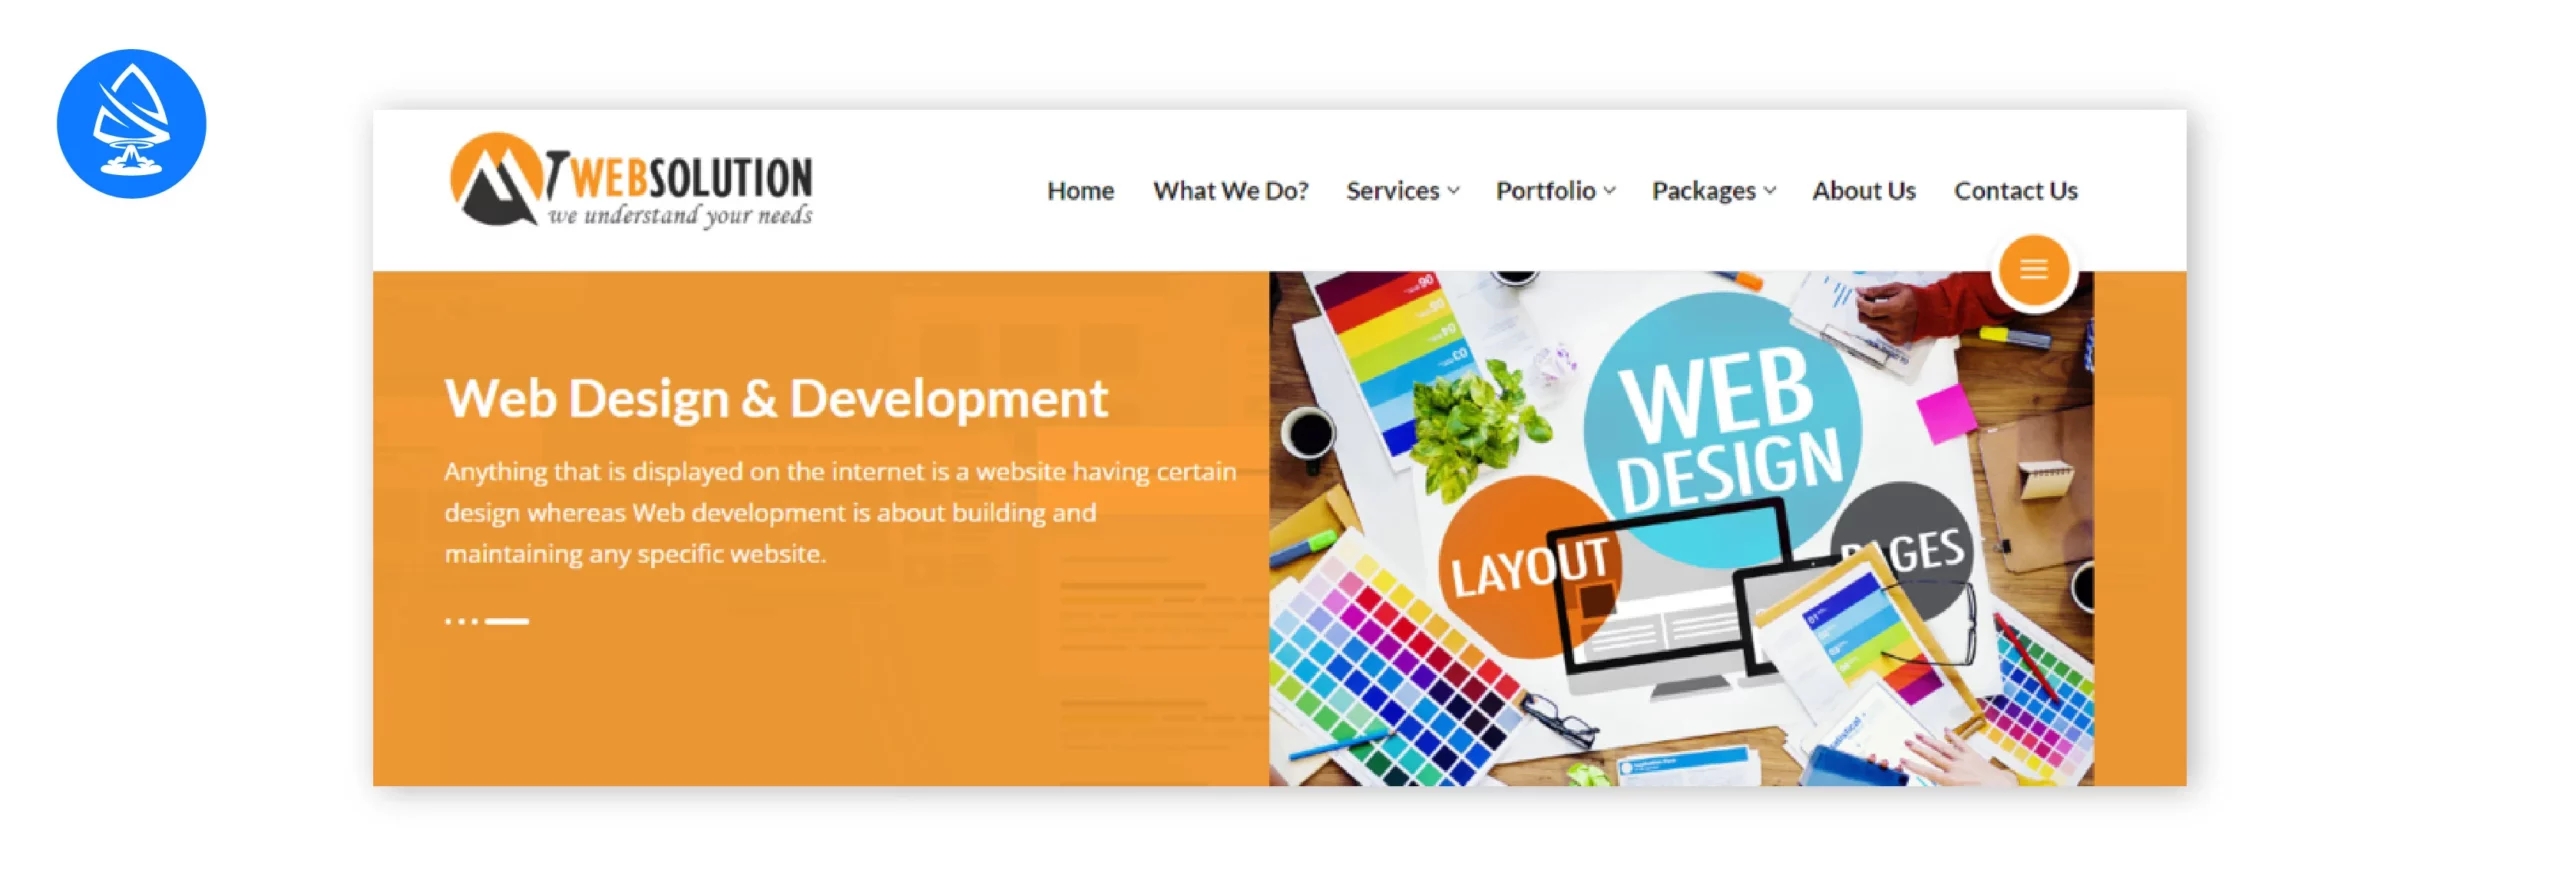 MVWEBSOLUTION - WordPress Website Design and Development Services